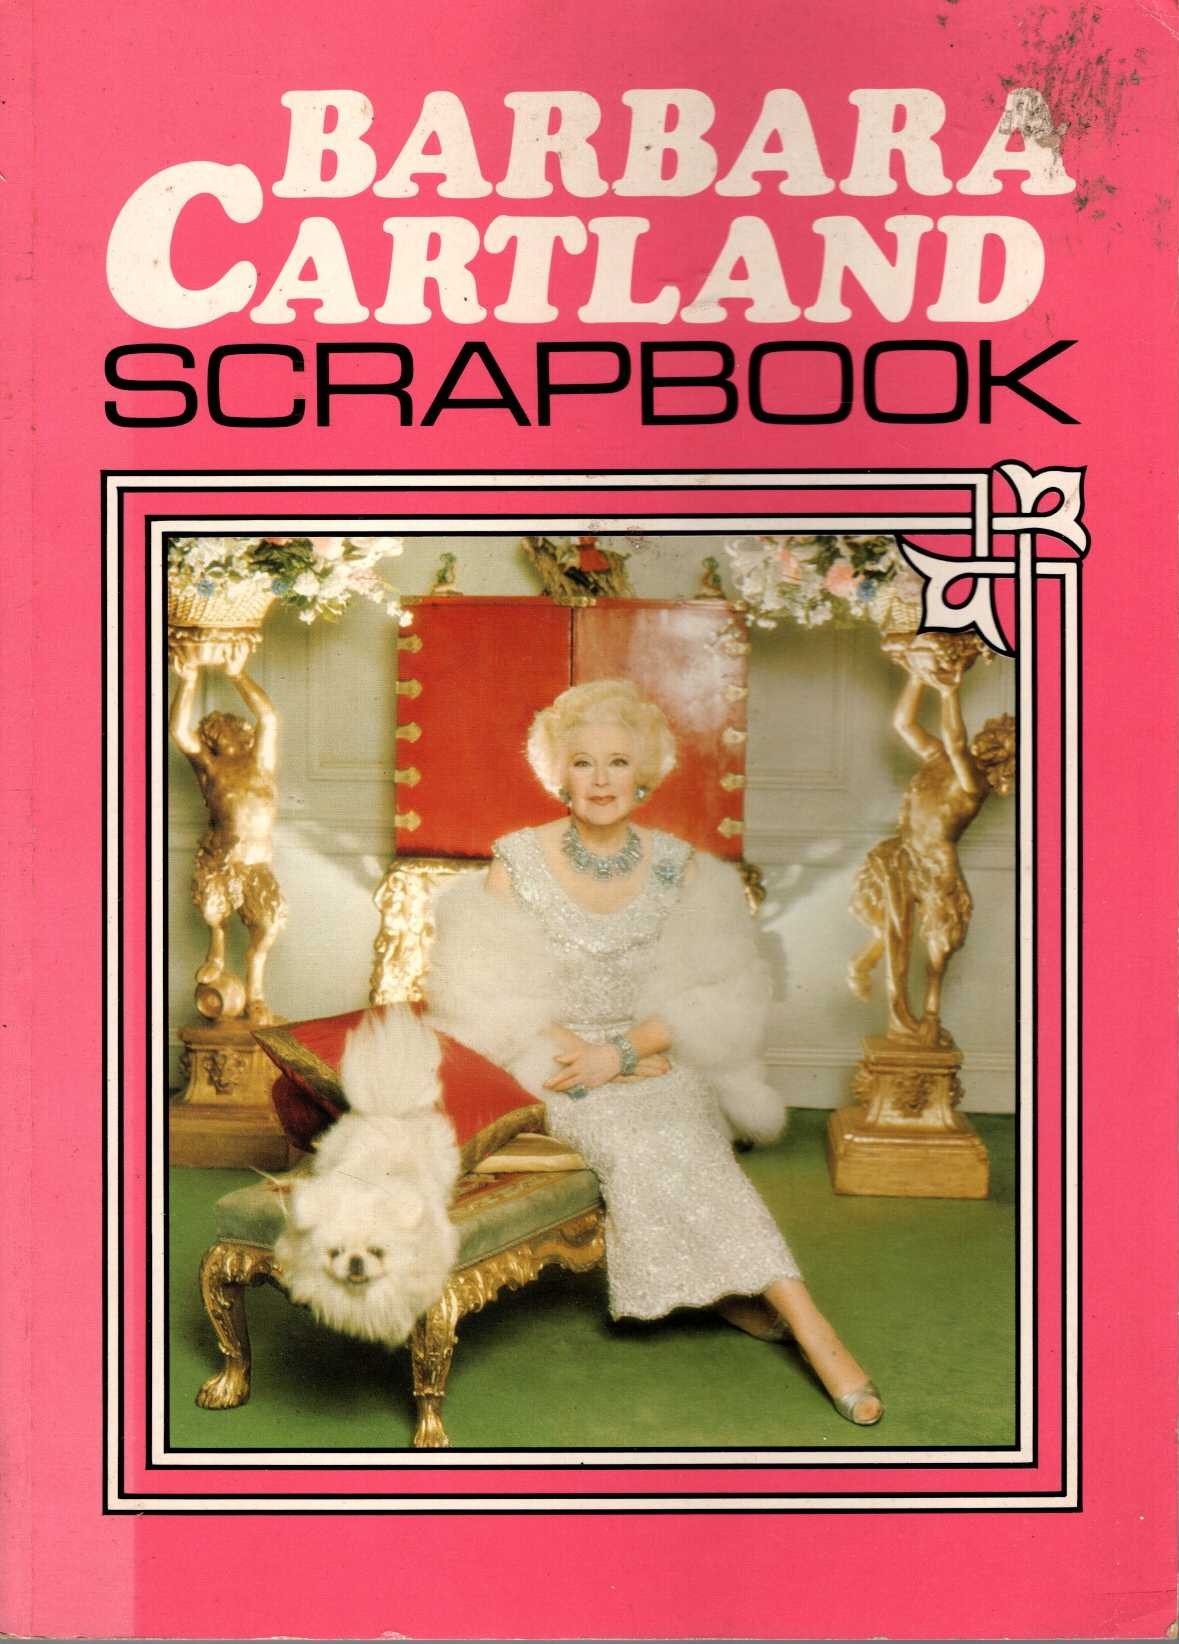 Barbara Cartland  BARBARA CARTLAND SCRAPBOOK front book cover image